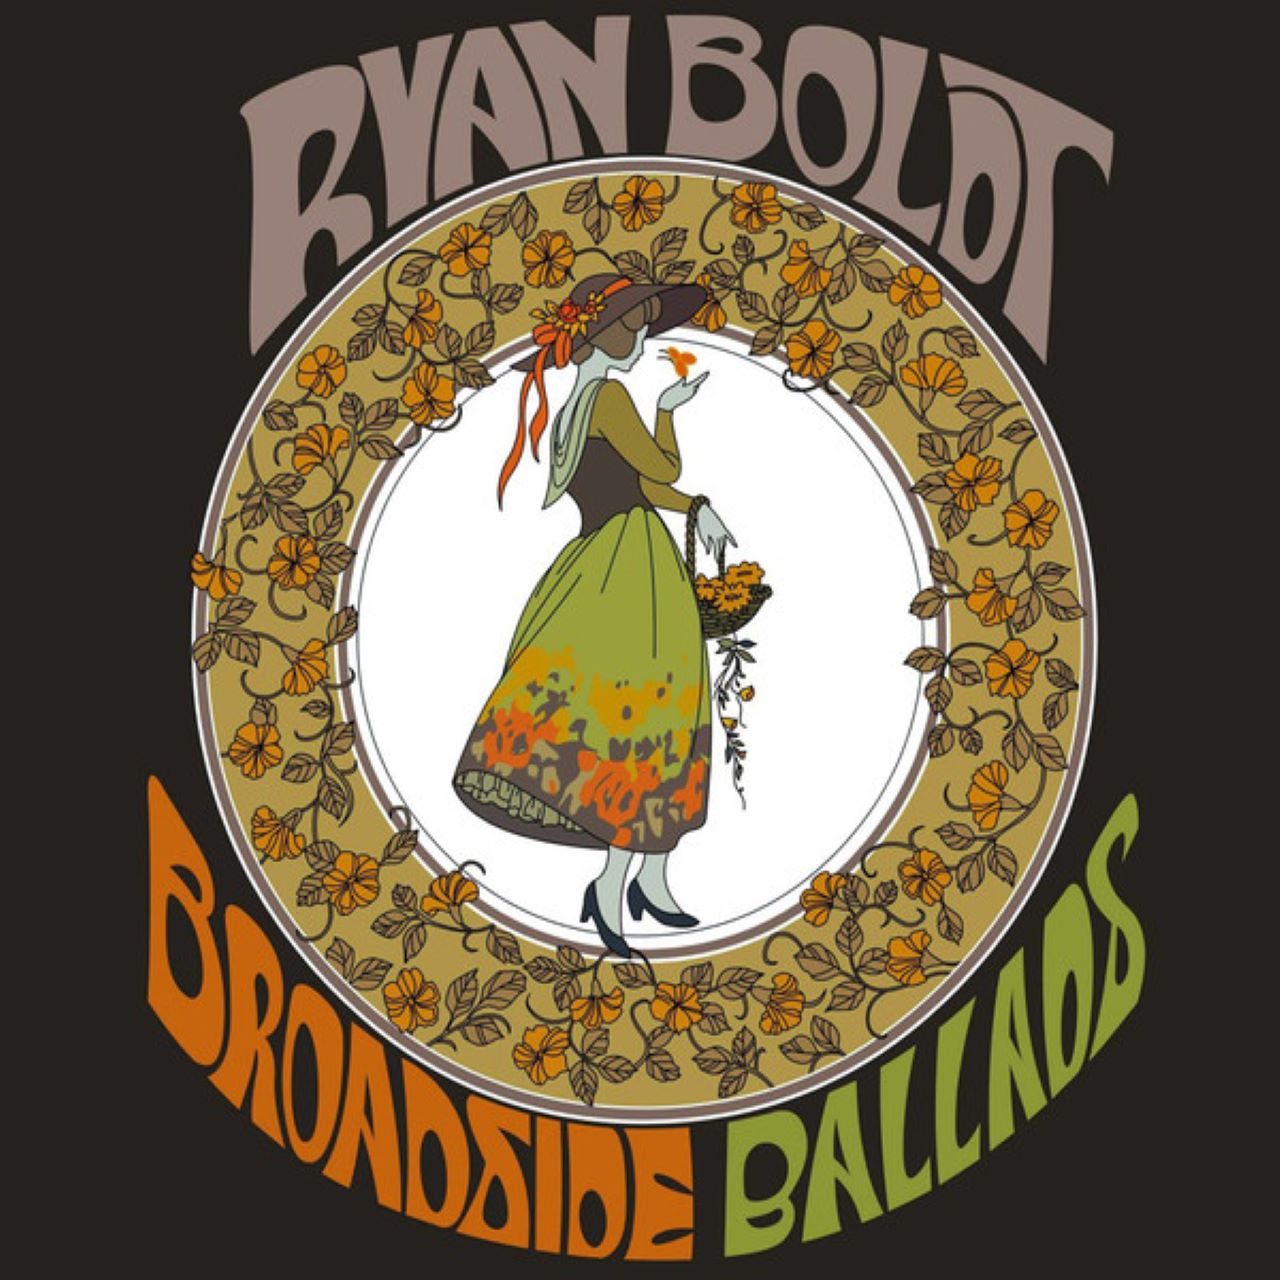 Ryan Boldt - Broadside Ballads cover album